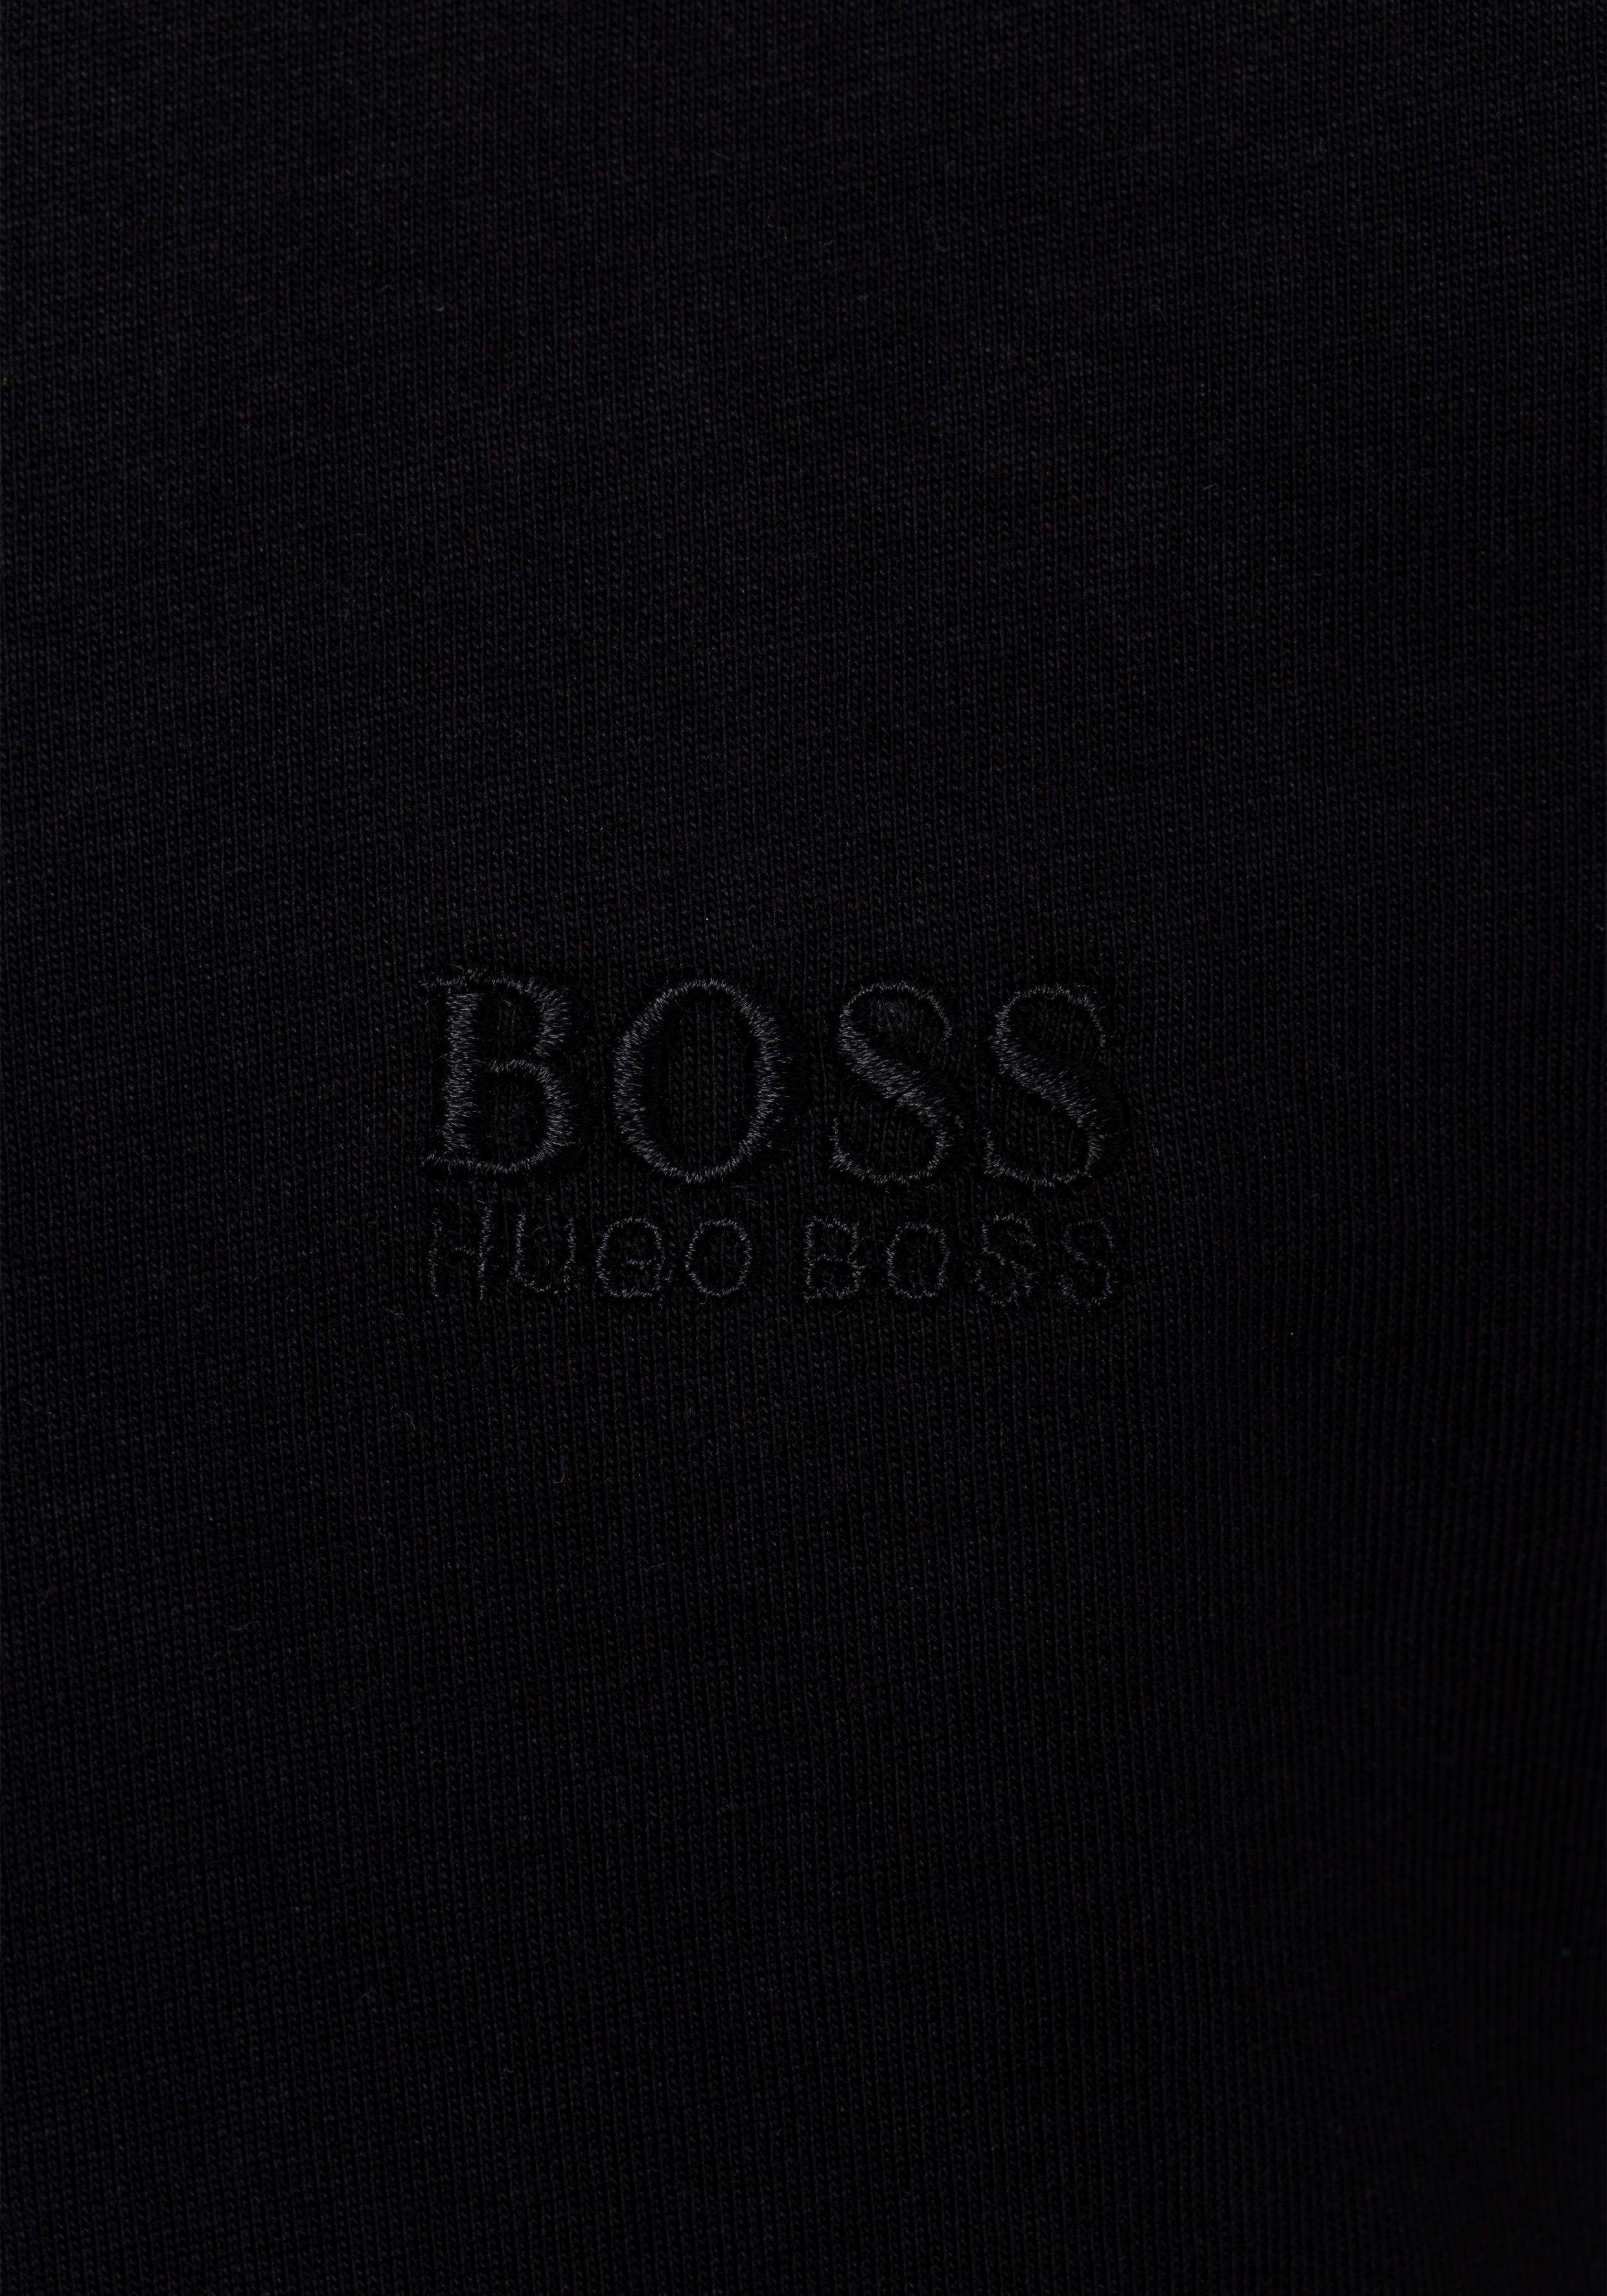 BOSS V-Shirt T-Shirt VN 3P CO (Packung) black